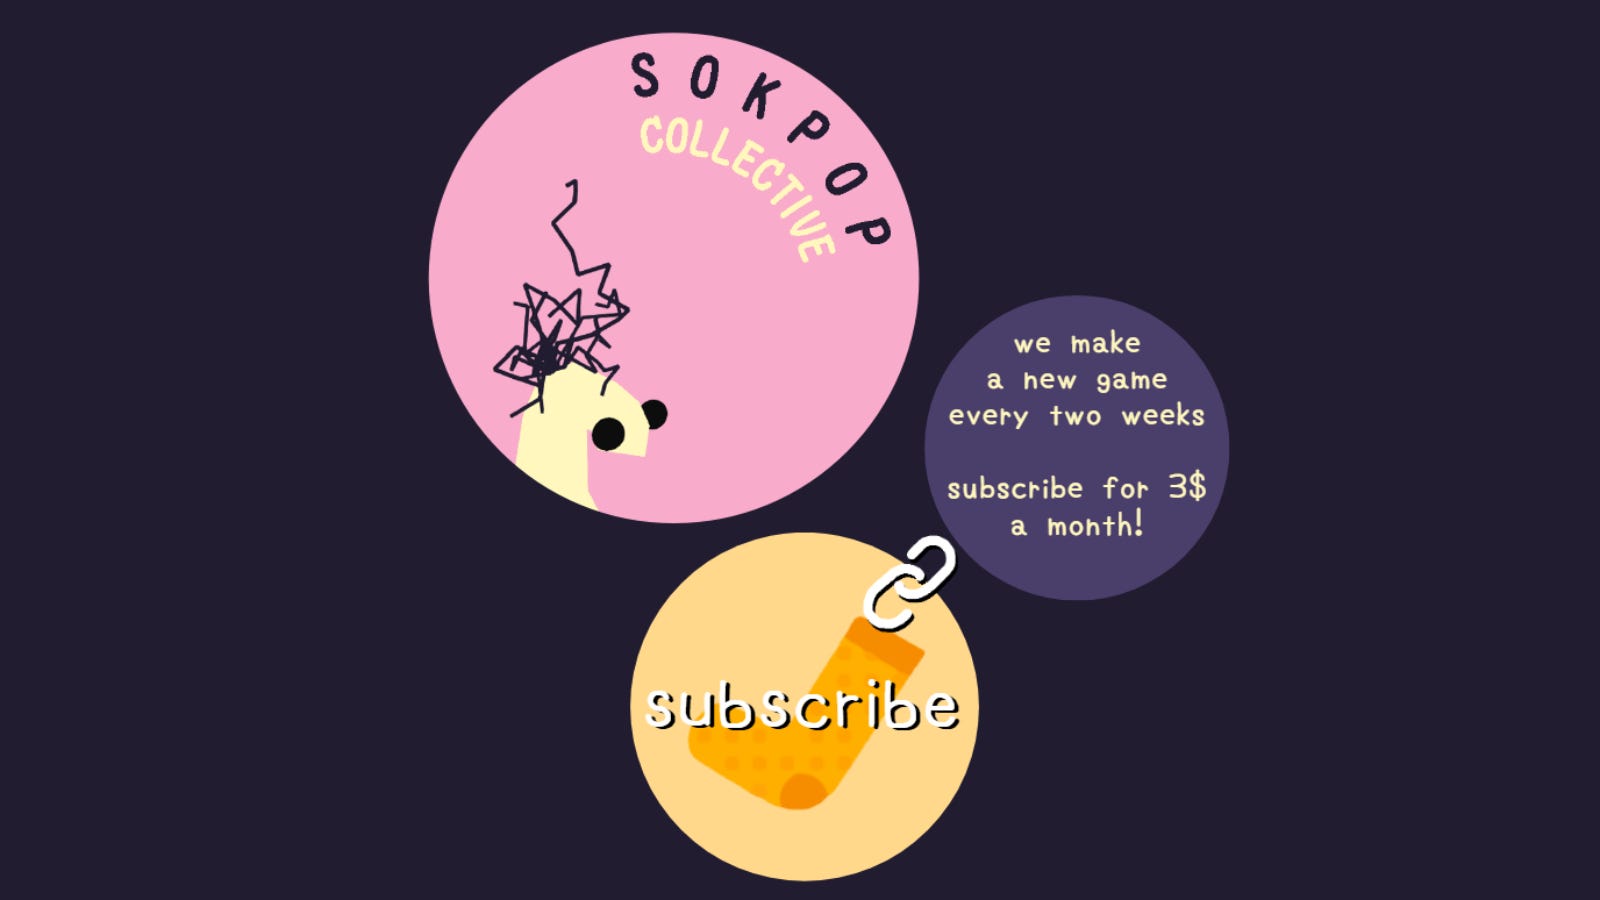 Sokpop Collective Webbsida Hemsida